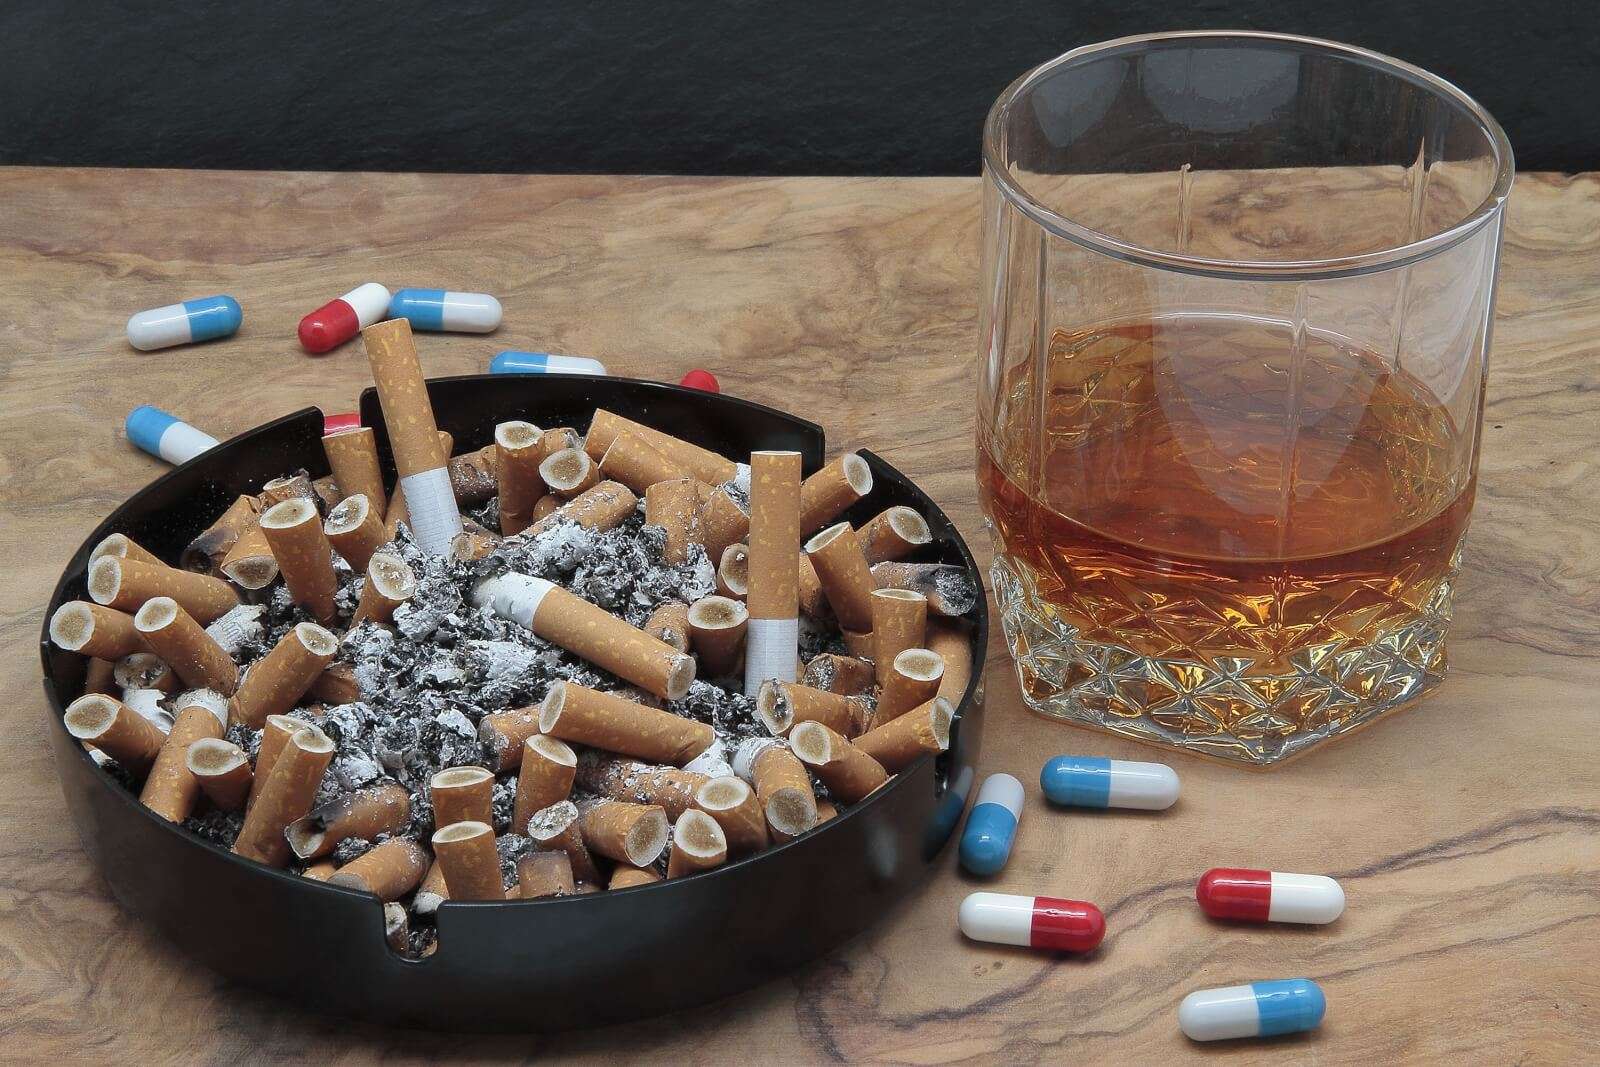 Nicotine (Cigarettes) and Alcohol Abuse